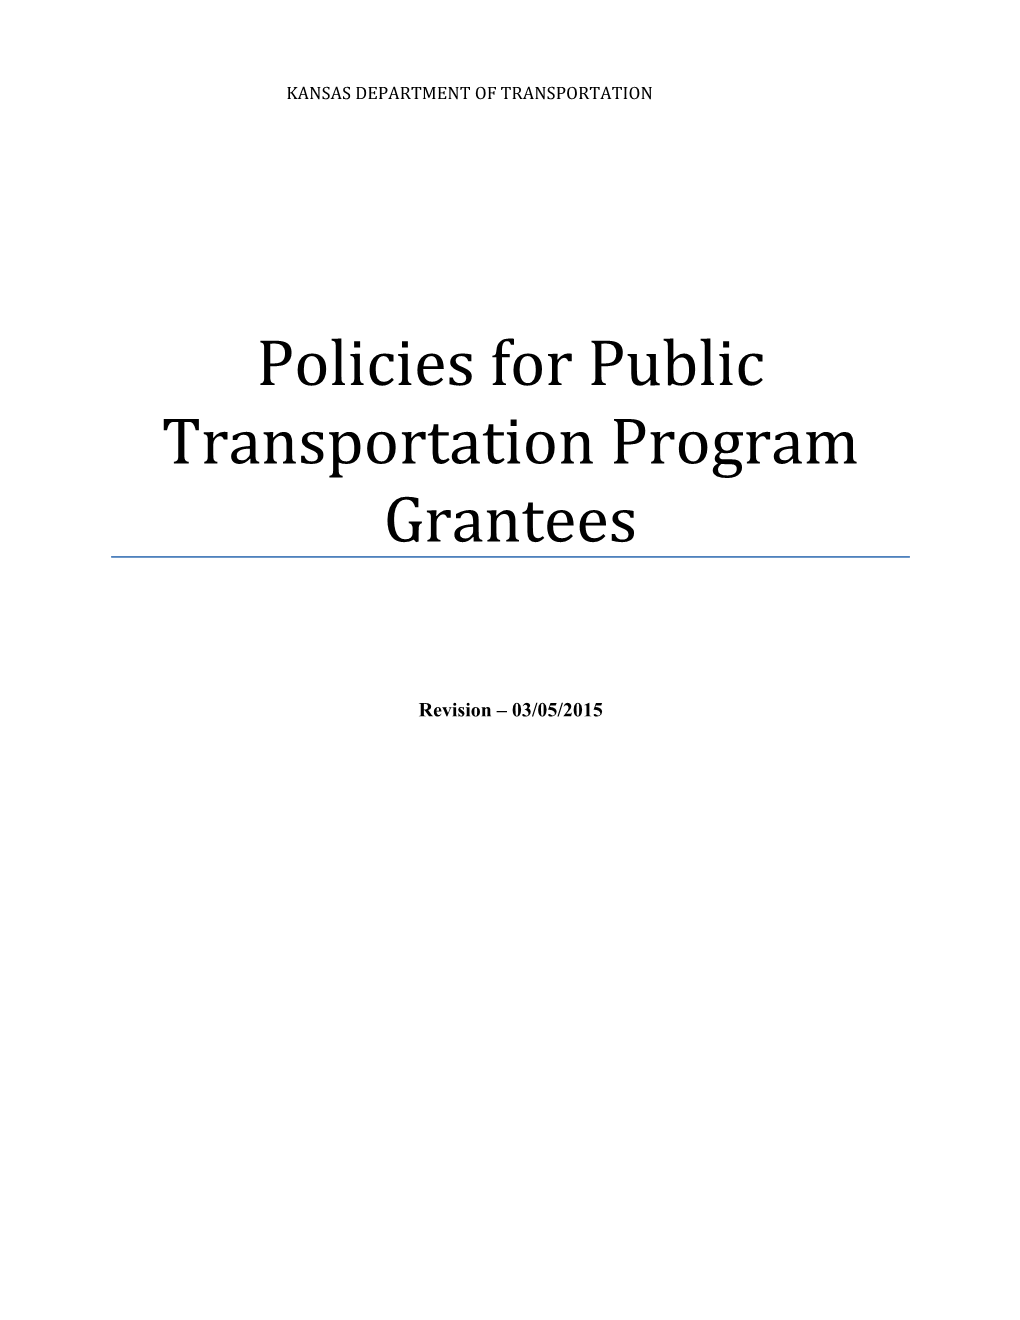 Policies for Public Transportation Program Grantees